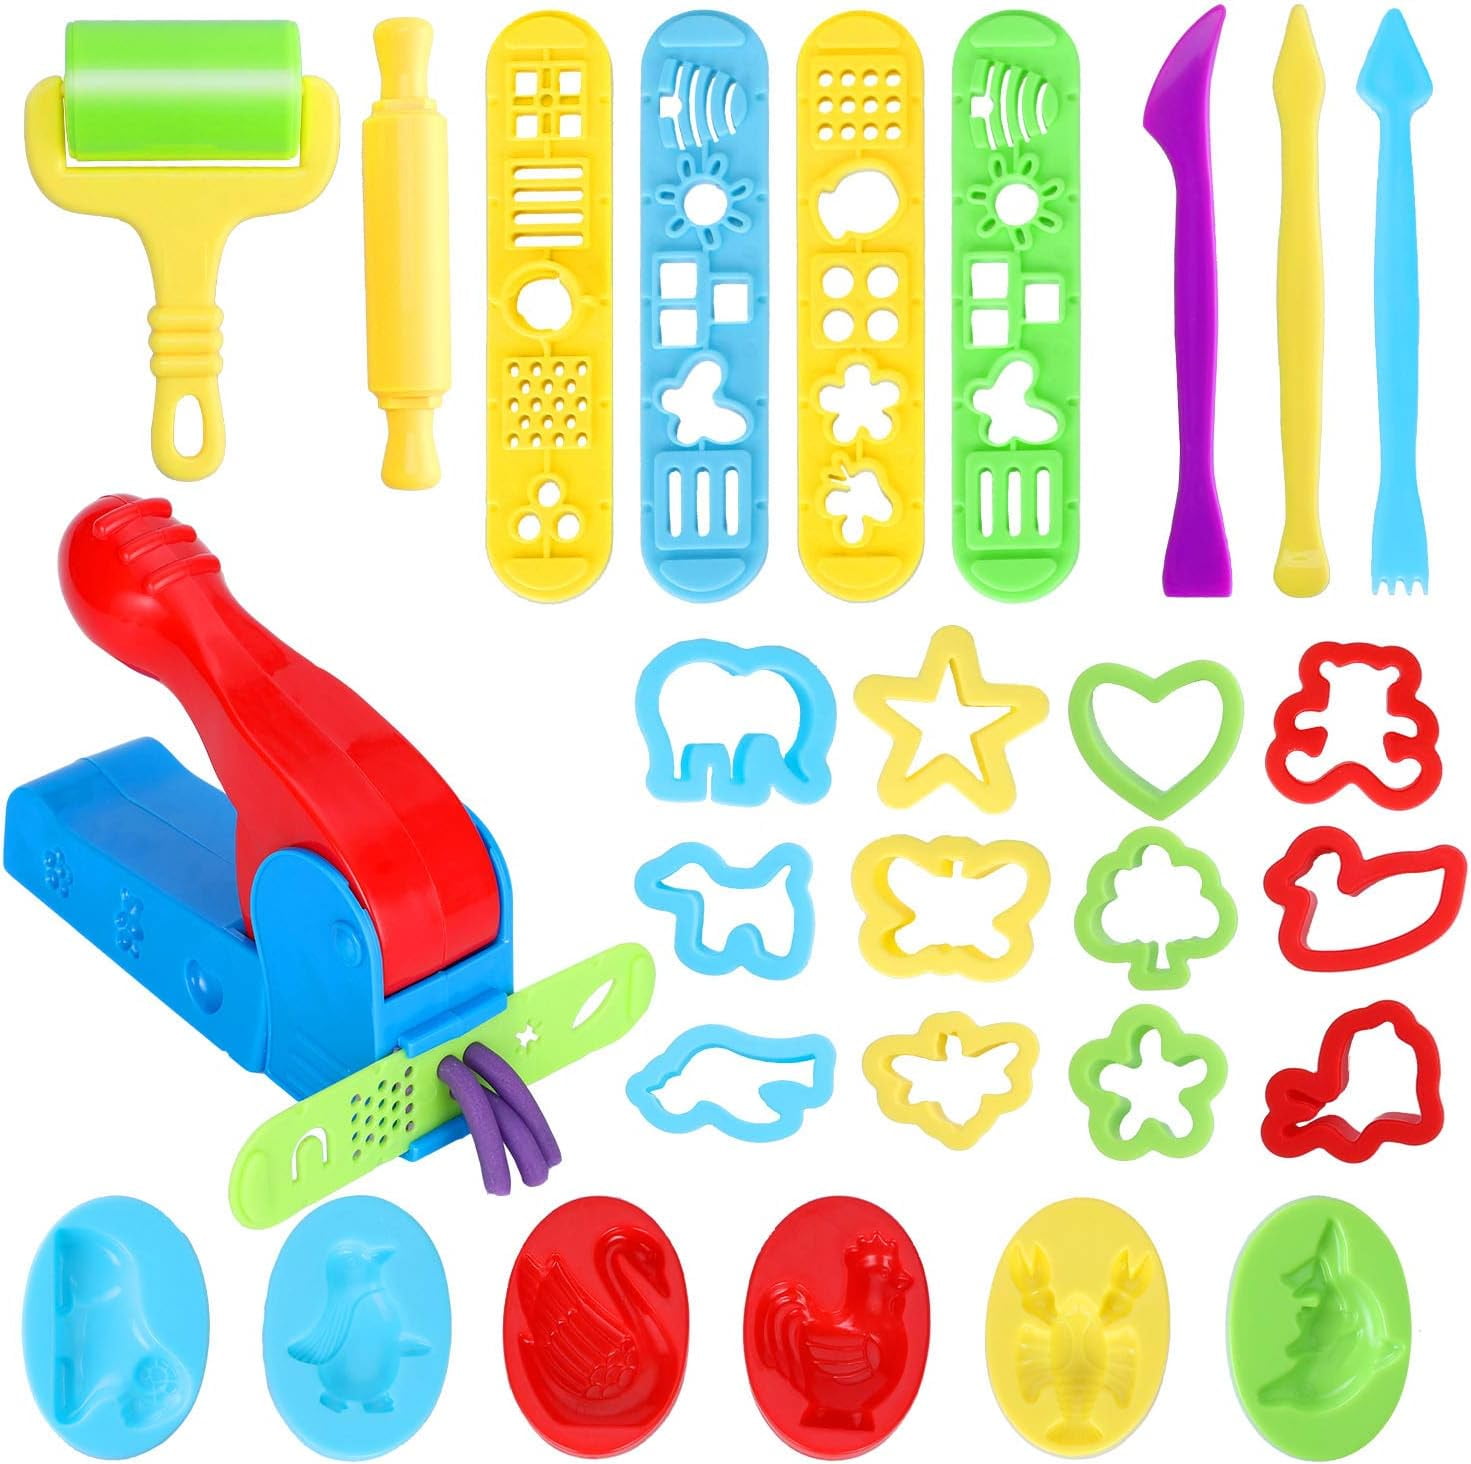 26 Pieces Play Dough Tools Playdough Accessories Set Various Plastic Molds  Rollers Cutters Educational Gift For Children, Random Color 26pcs Set1